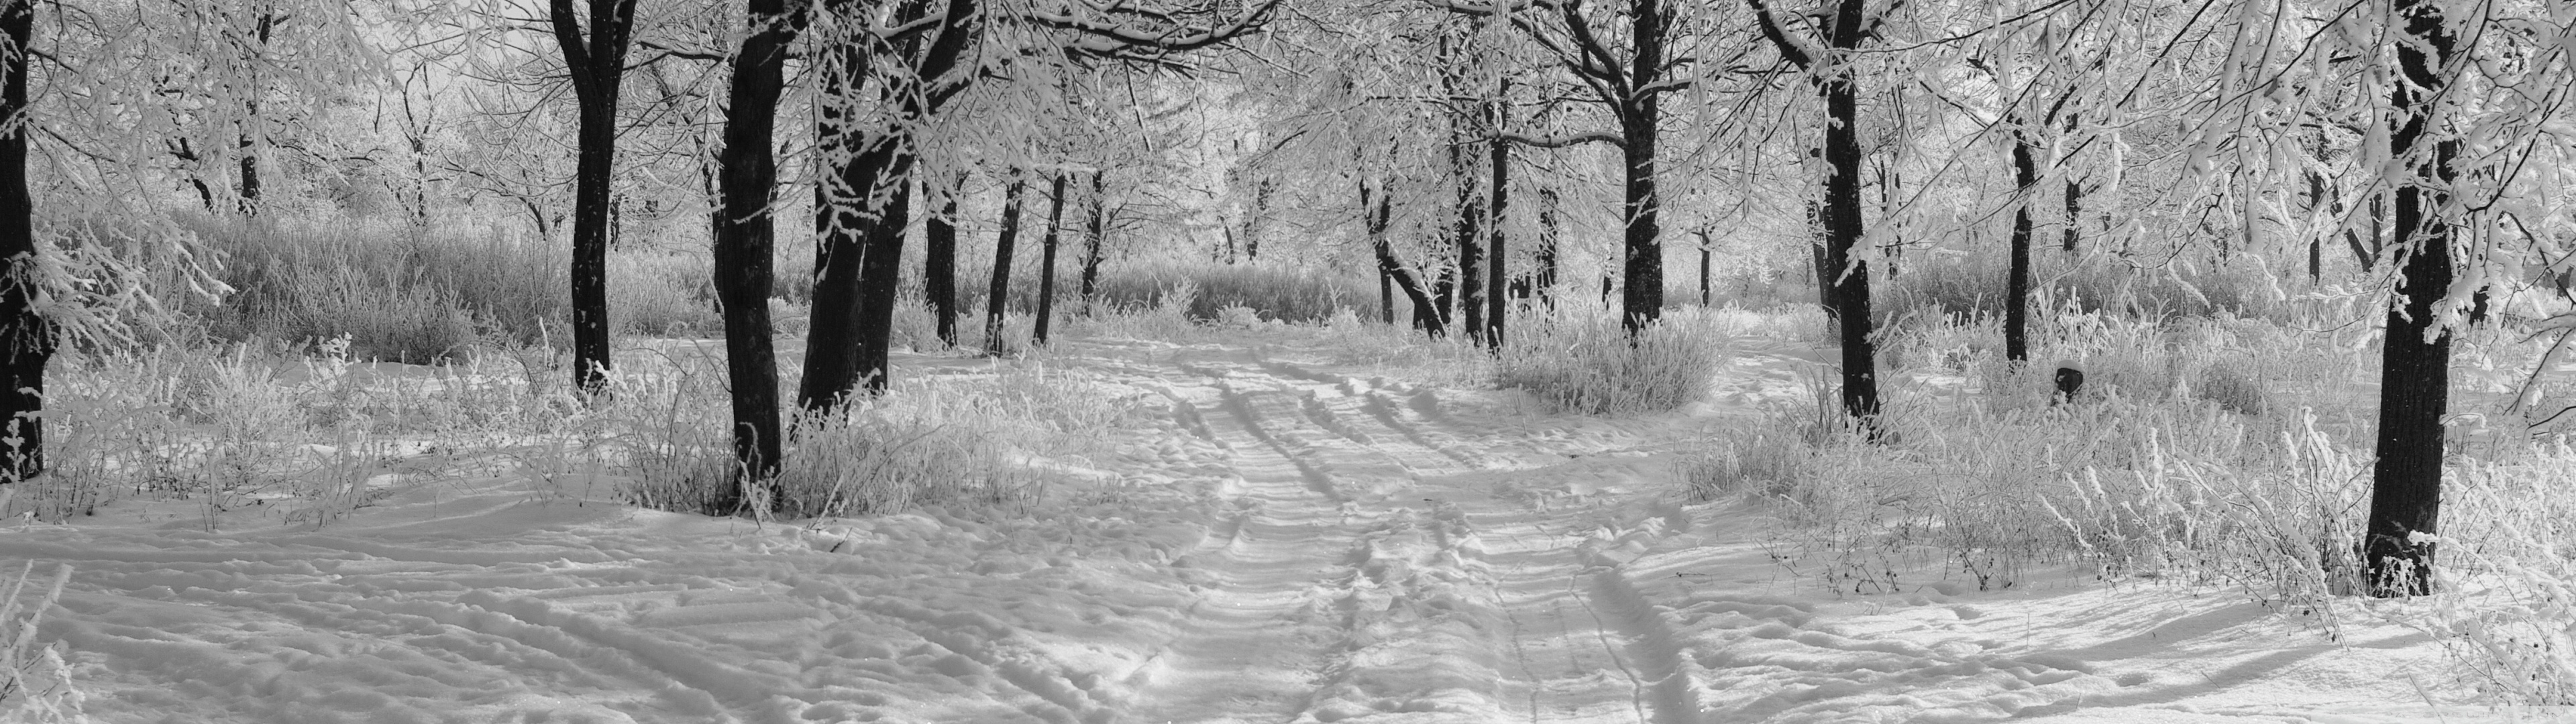 Trails In The Snow Winter Ultra HD Desktop Background Wallpaper